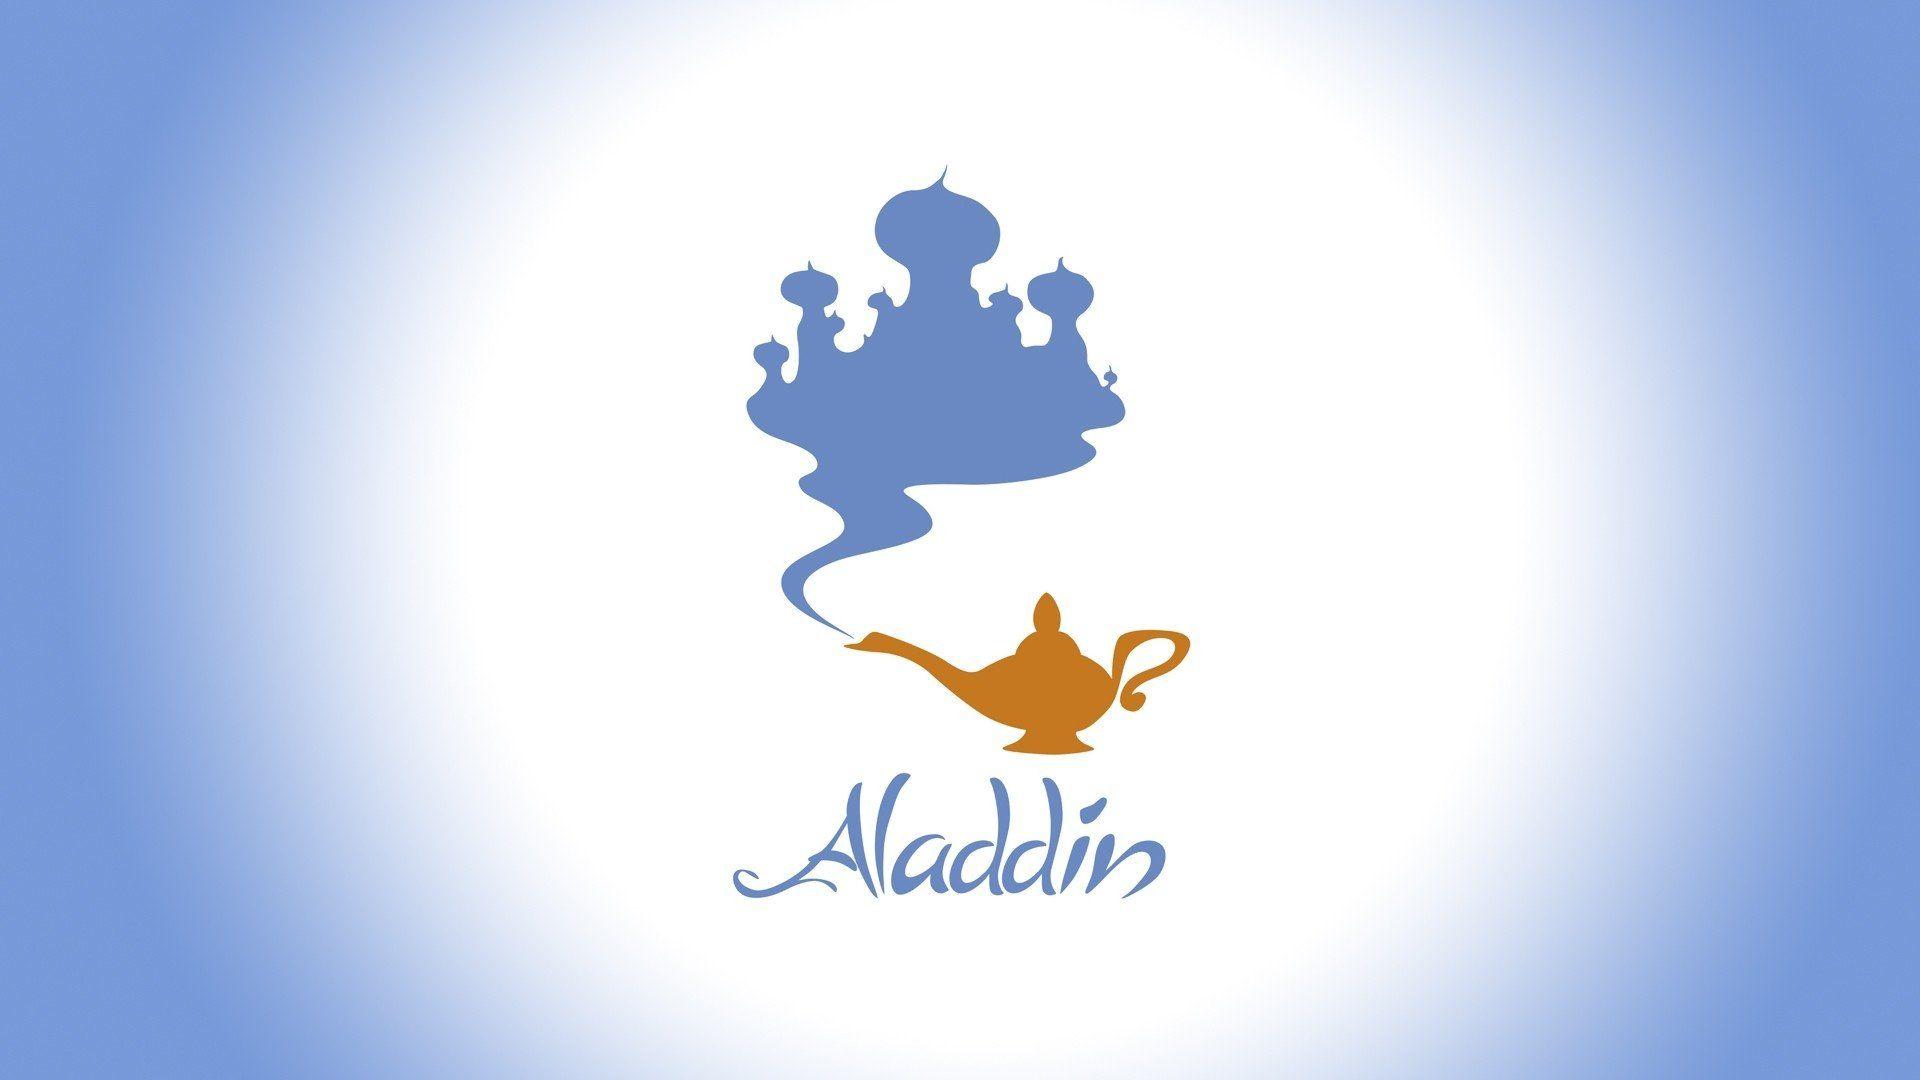 48 Aladdin HD Wallpapers